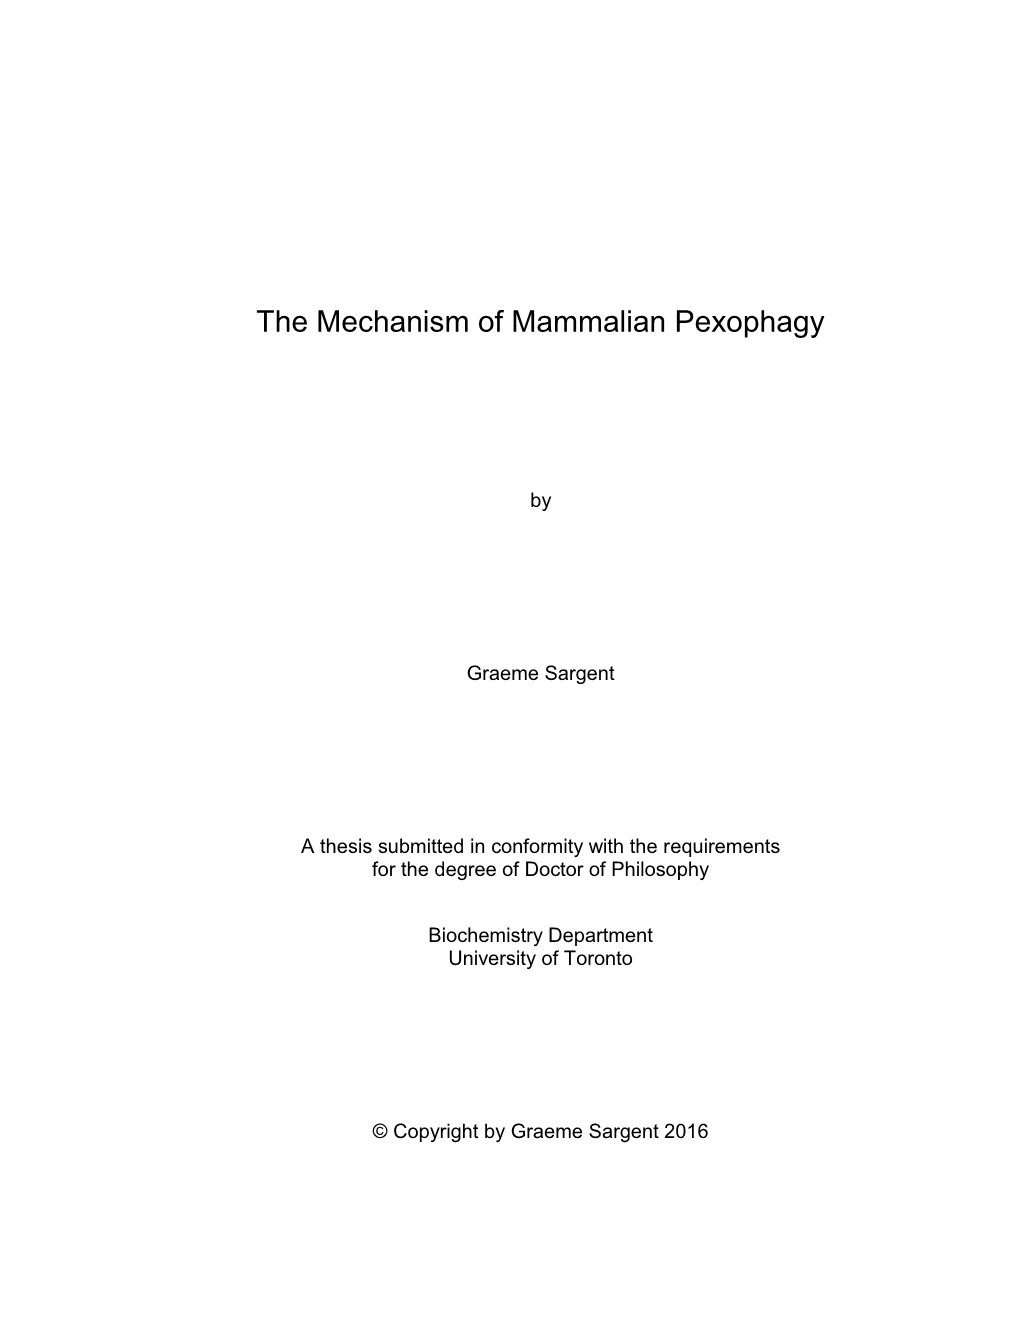 The Mechanism of Mammalian Pexophagy